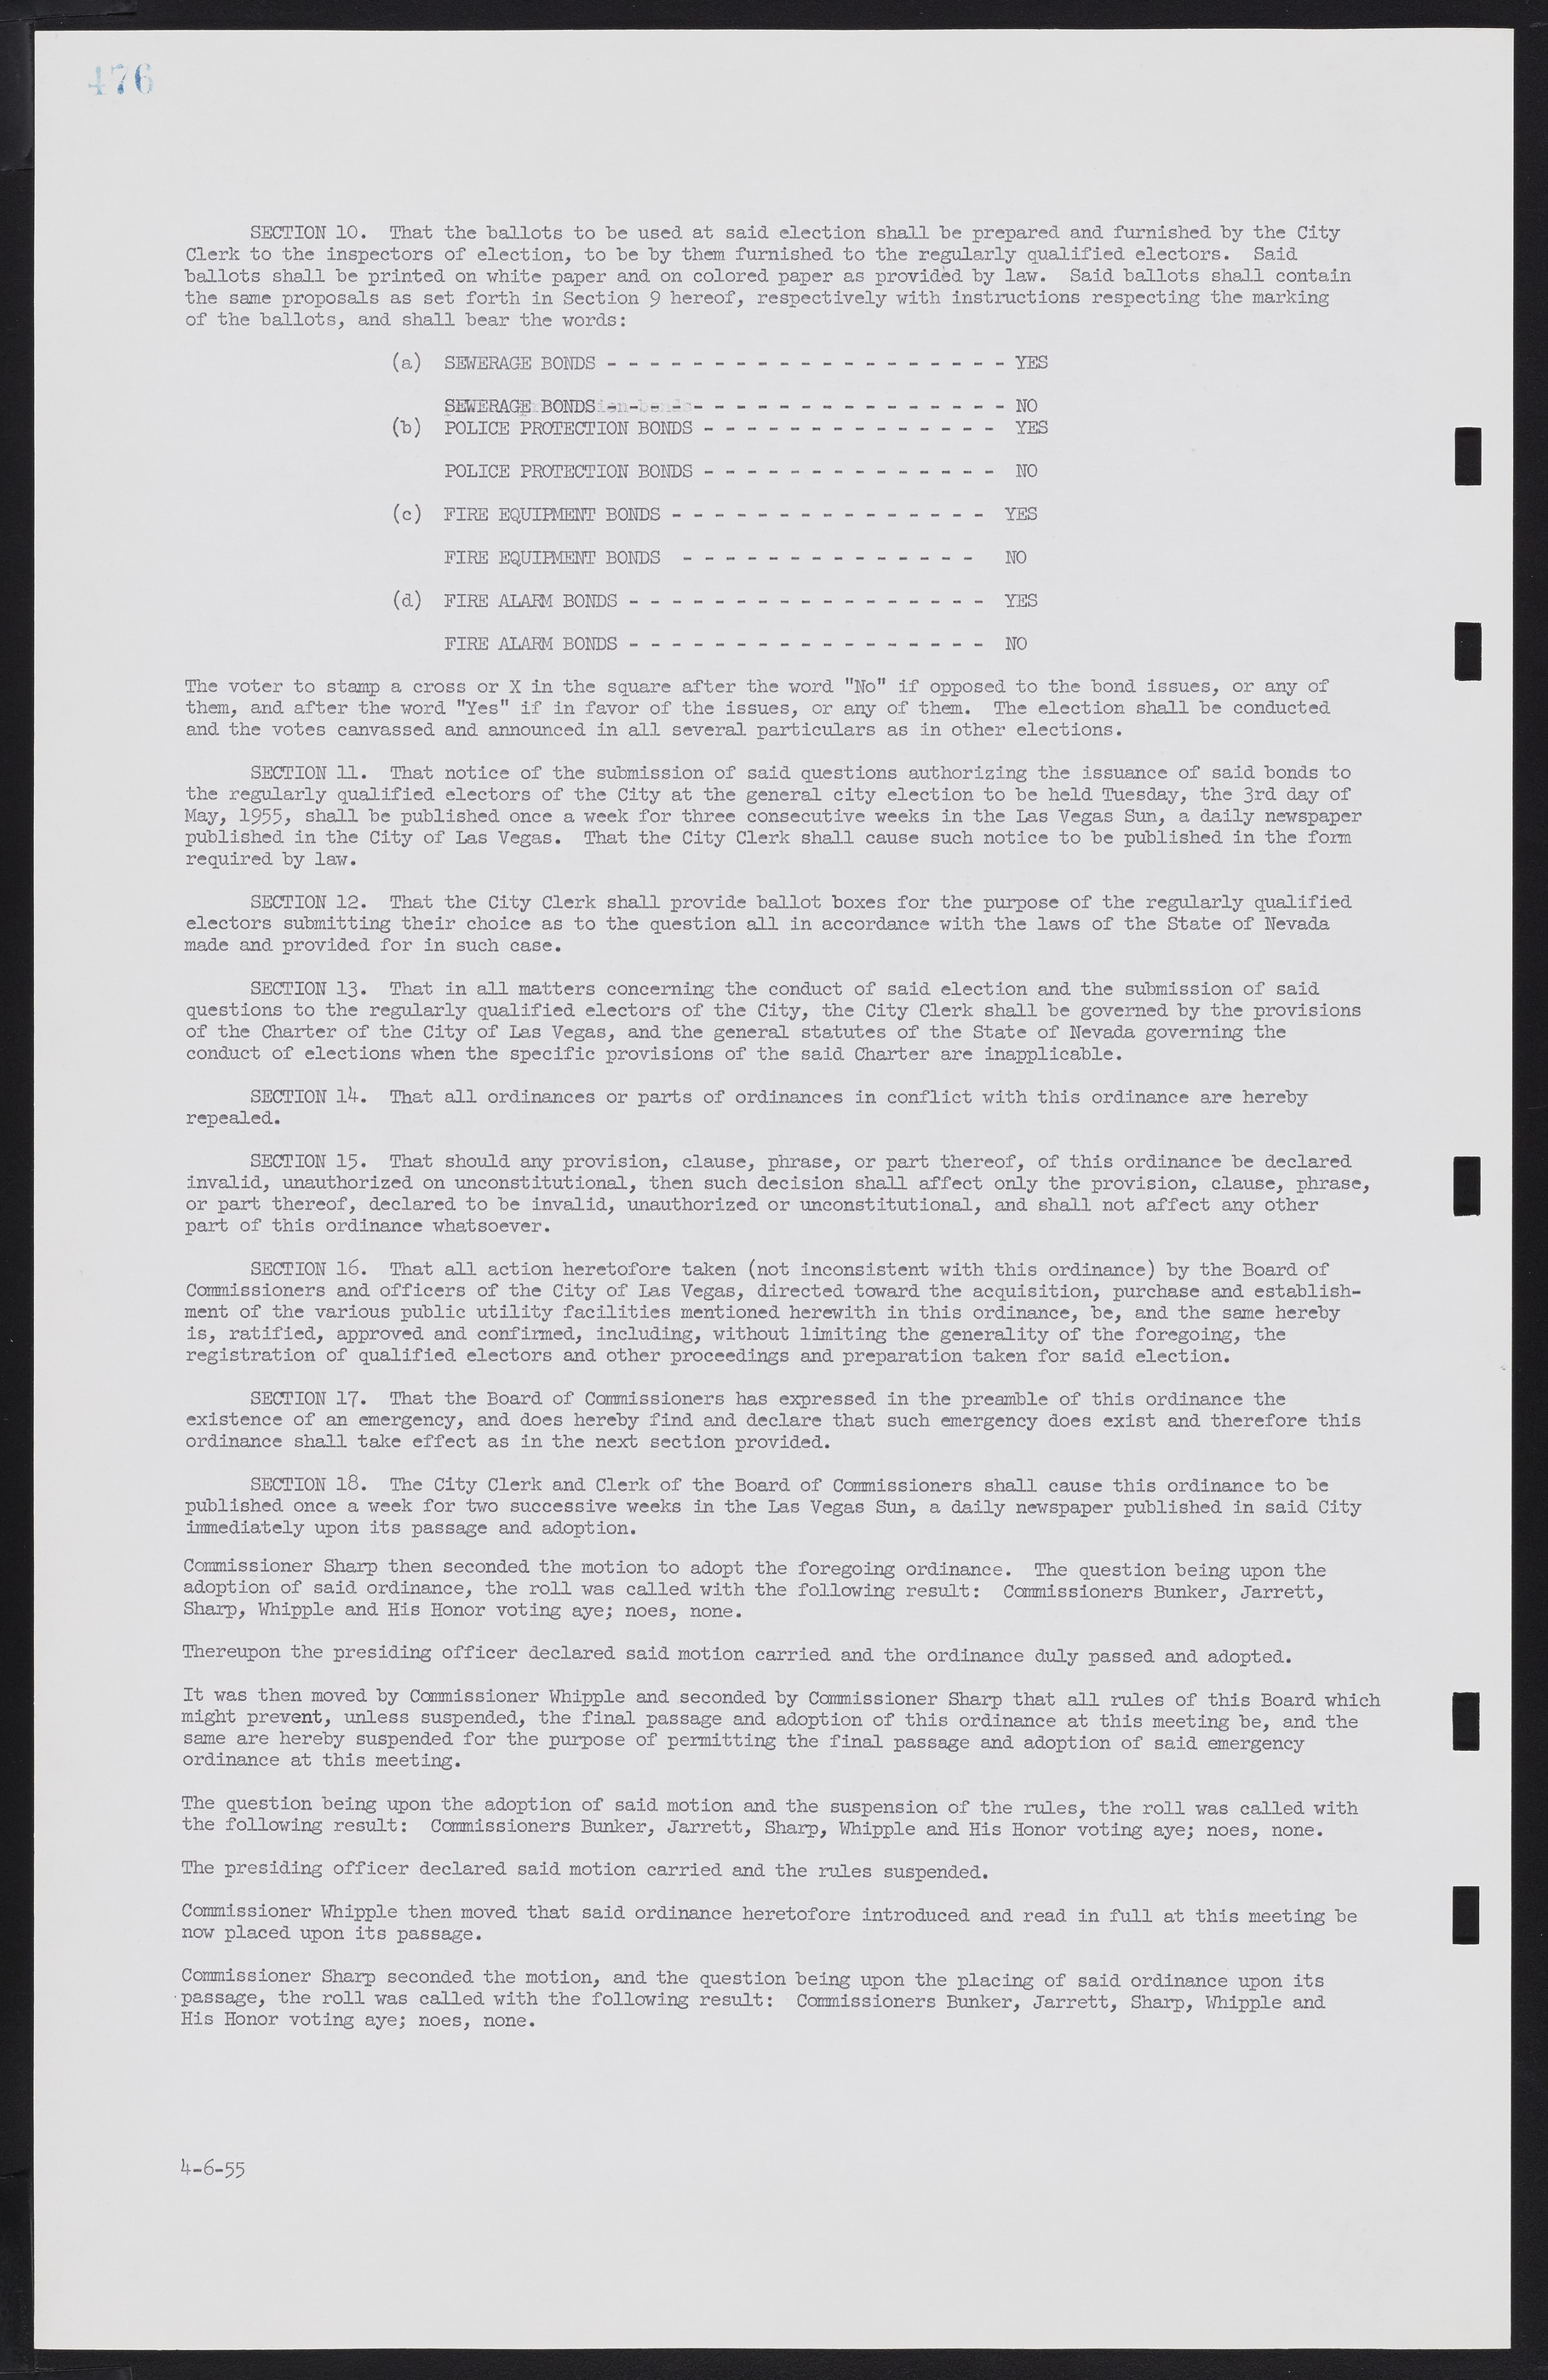 Las Vegas City Commission Minutes, February 17, 1954 to September 21, 1955, lvc000009-482